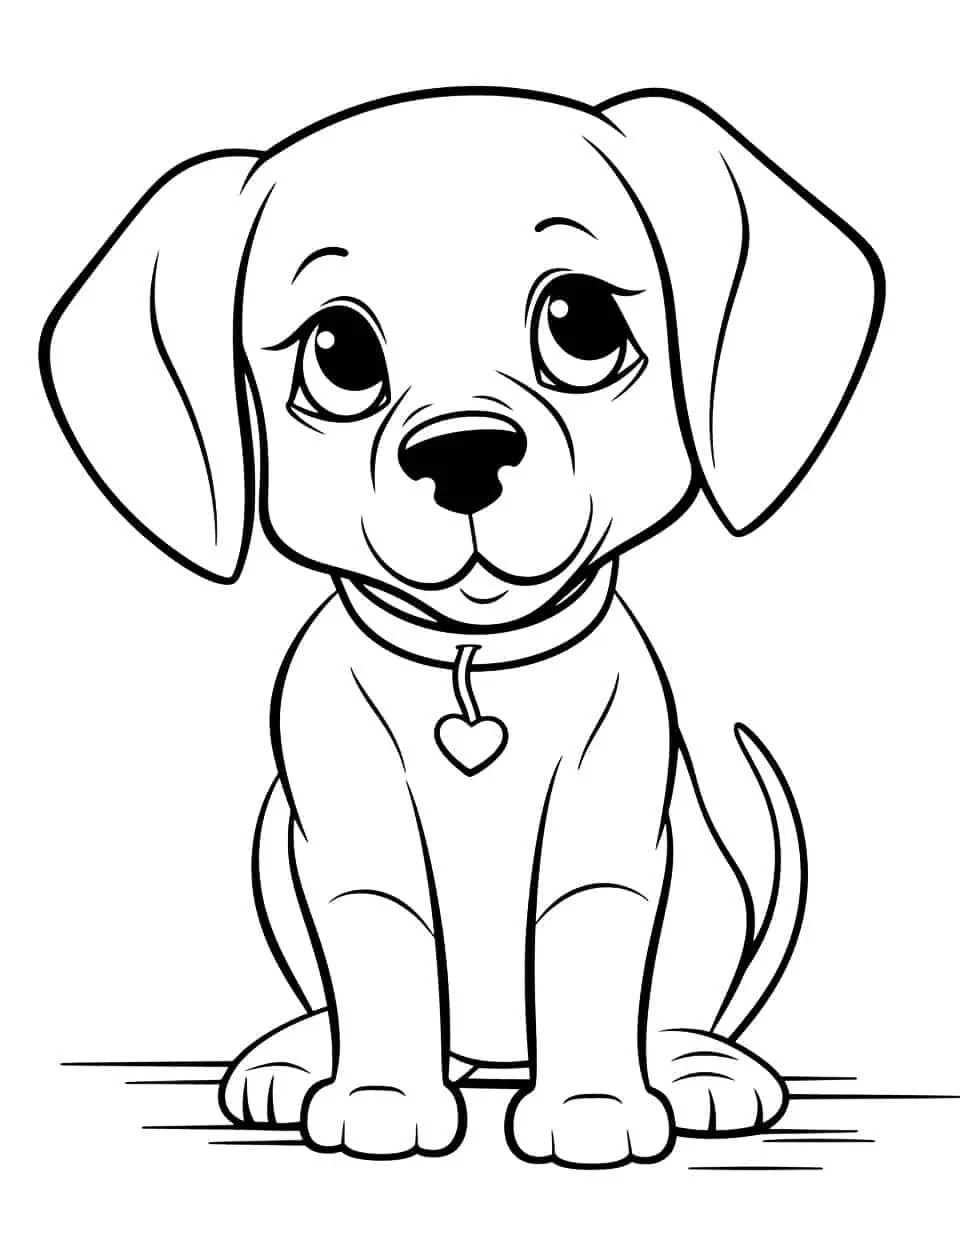 Kawaii Beagle Dog Coloring Page - A cute, big-eyed, kawaii-style Beagle that kids will love to color.